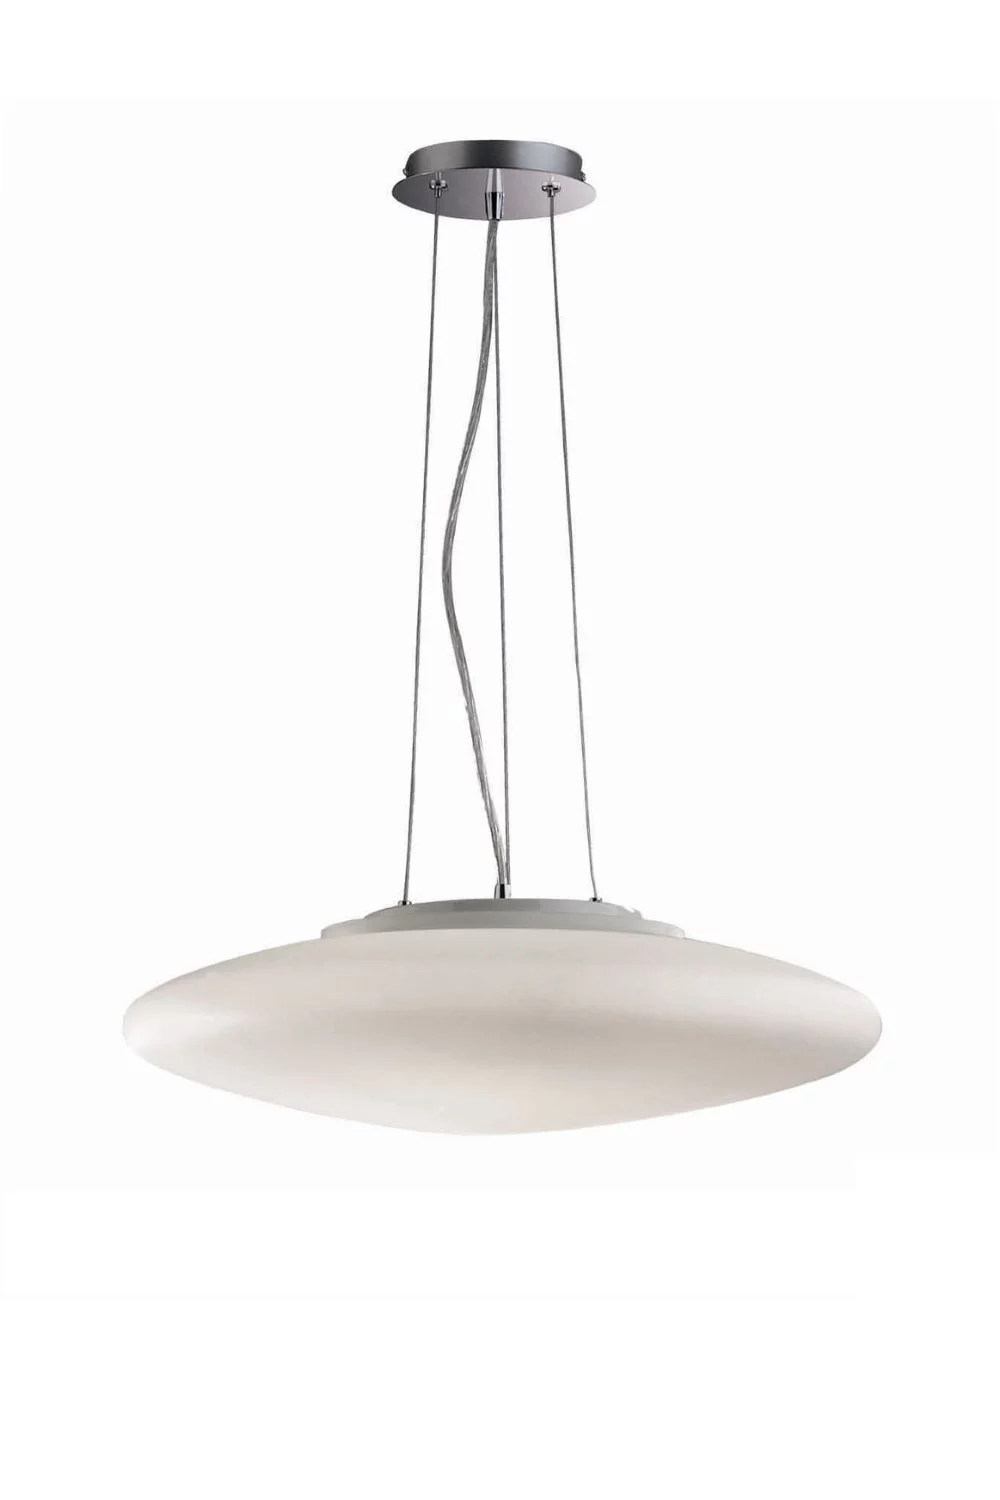   
                        
                        Люстра IDEAL LUX (Италия) 48928    
                         в стиле Модерн.  
                        Тип источника света: светодиодная лампа, сменная.                         Форма: Круг.                         Цвета плафонов и подвесок: Белый.                         Материал: Стекло.                          фото 1